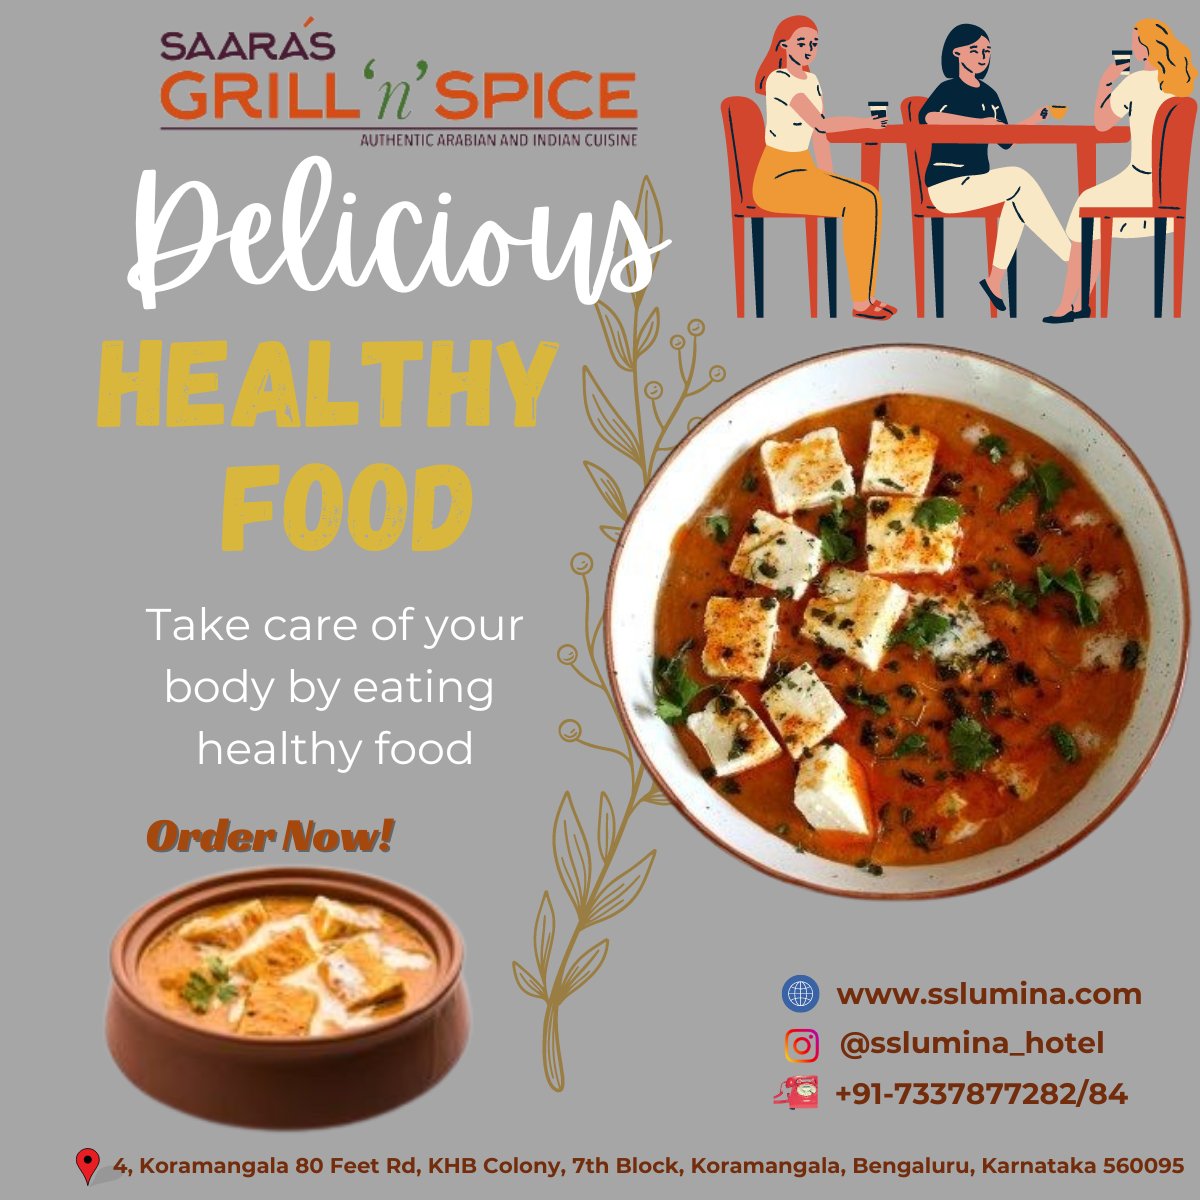 🔥✨ Exciting News! Saara's Grill 'N' Spice is turning up the heat! 🔥✨
.
.
#grillnspice #foodiefiesta #dᴇʟɪᴄɪᴏᴜsdᴇʟɪɢʜᴛs #SaarasSpiceAdventure #foodlovers #foodgoals #spiceitup #bangalore #bengaluru #foodtaste #chef #bestfoodinbangalore #bangalorefood